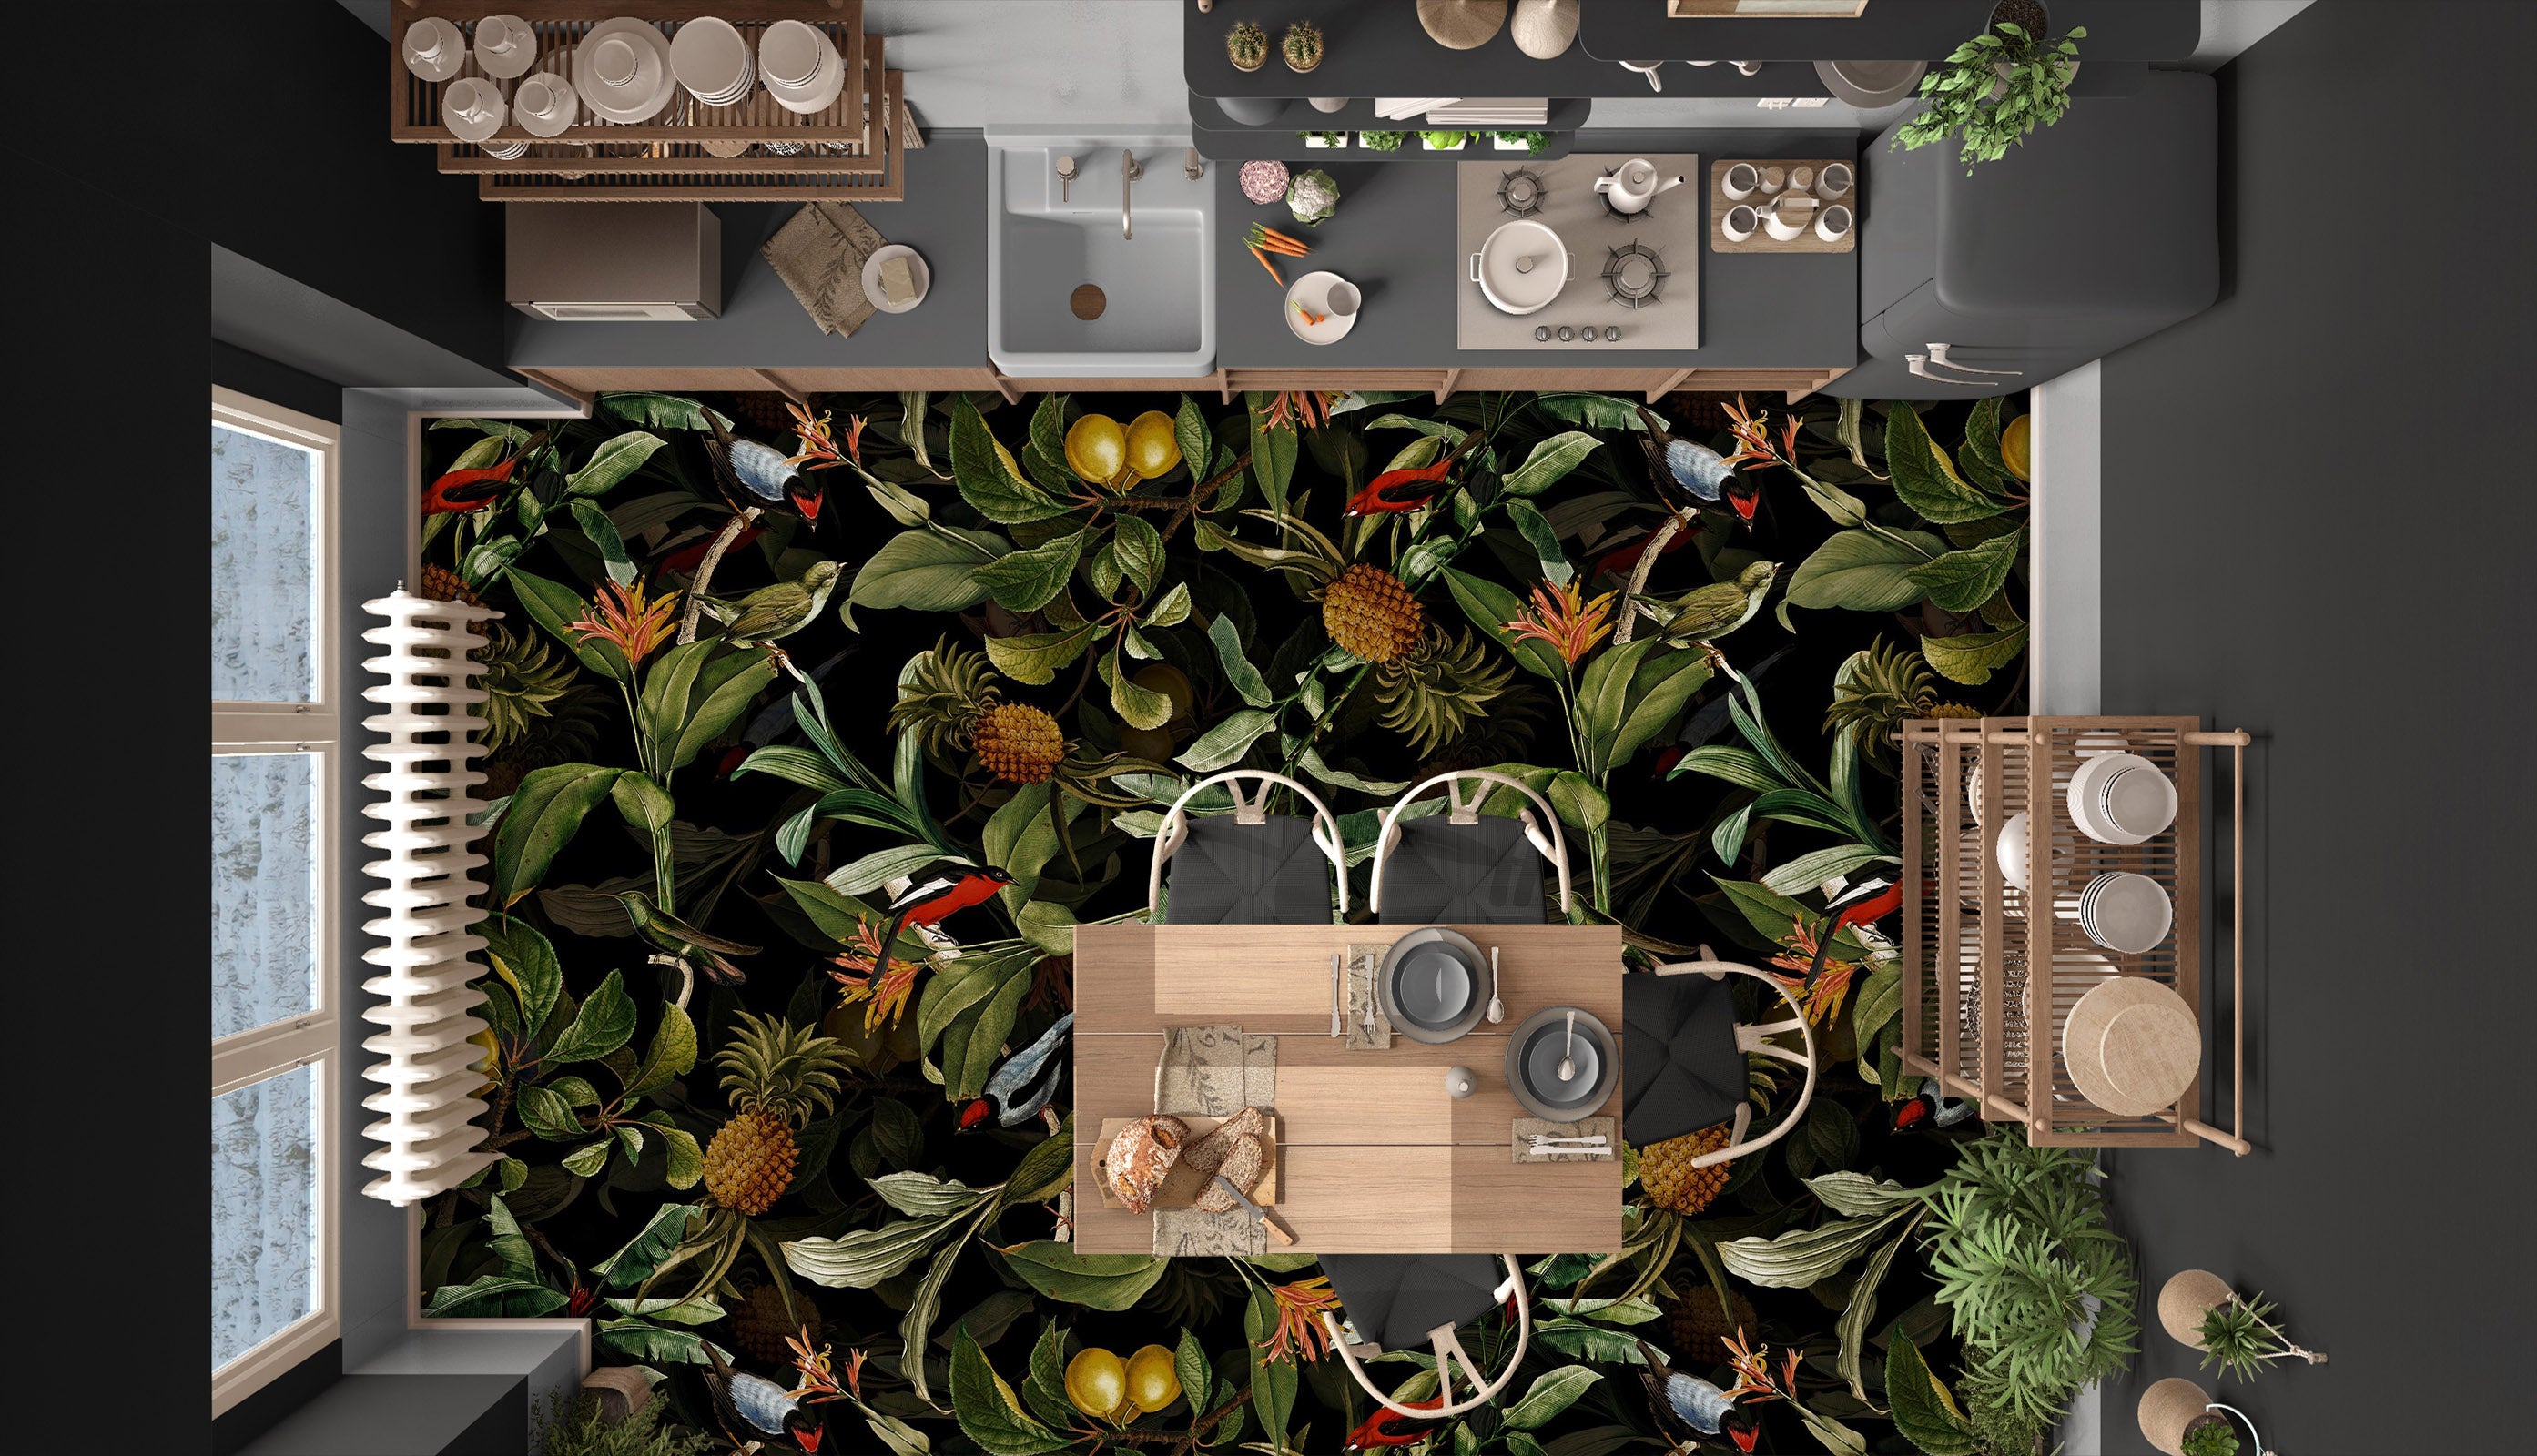 3D Fruit Leaves 99198 Uta Naumann Floor Mural  Wallpaper Murals Self-Adhesive Removable Print Epoxy